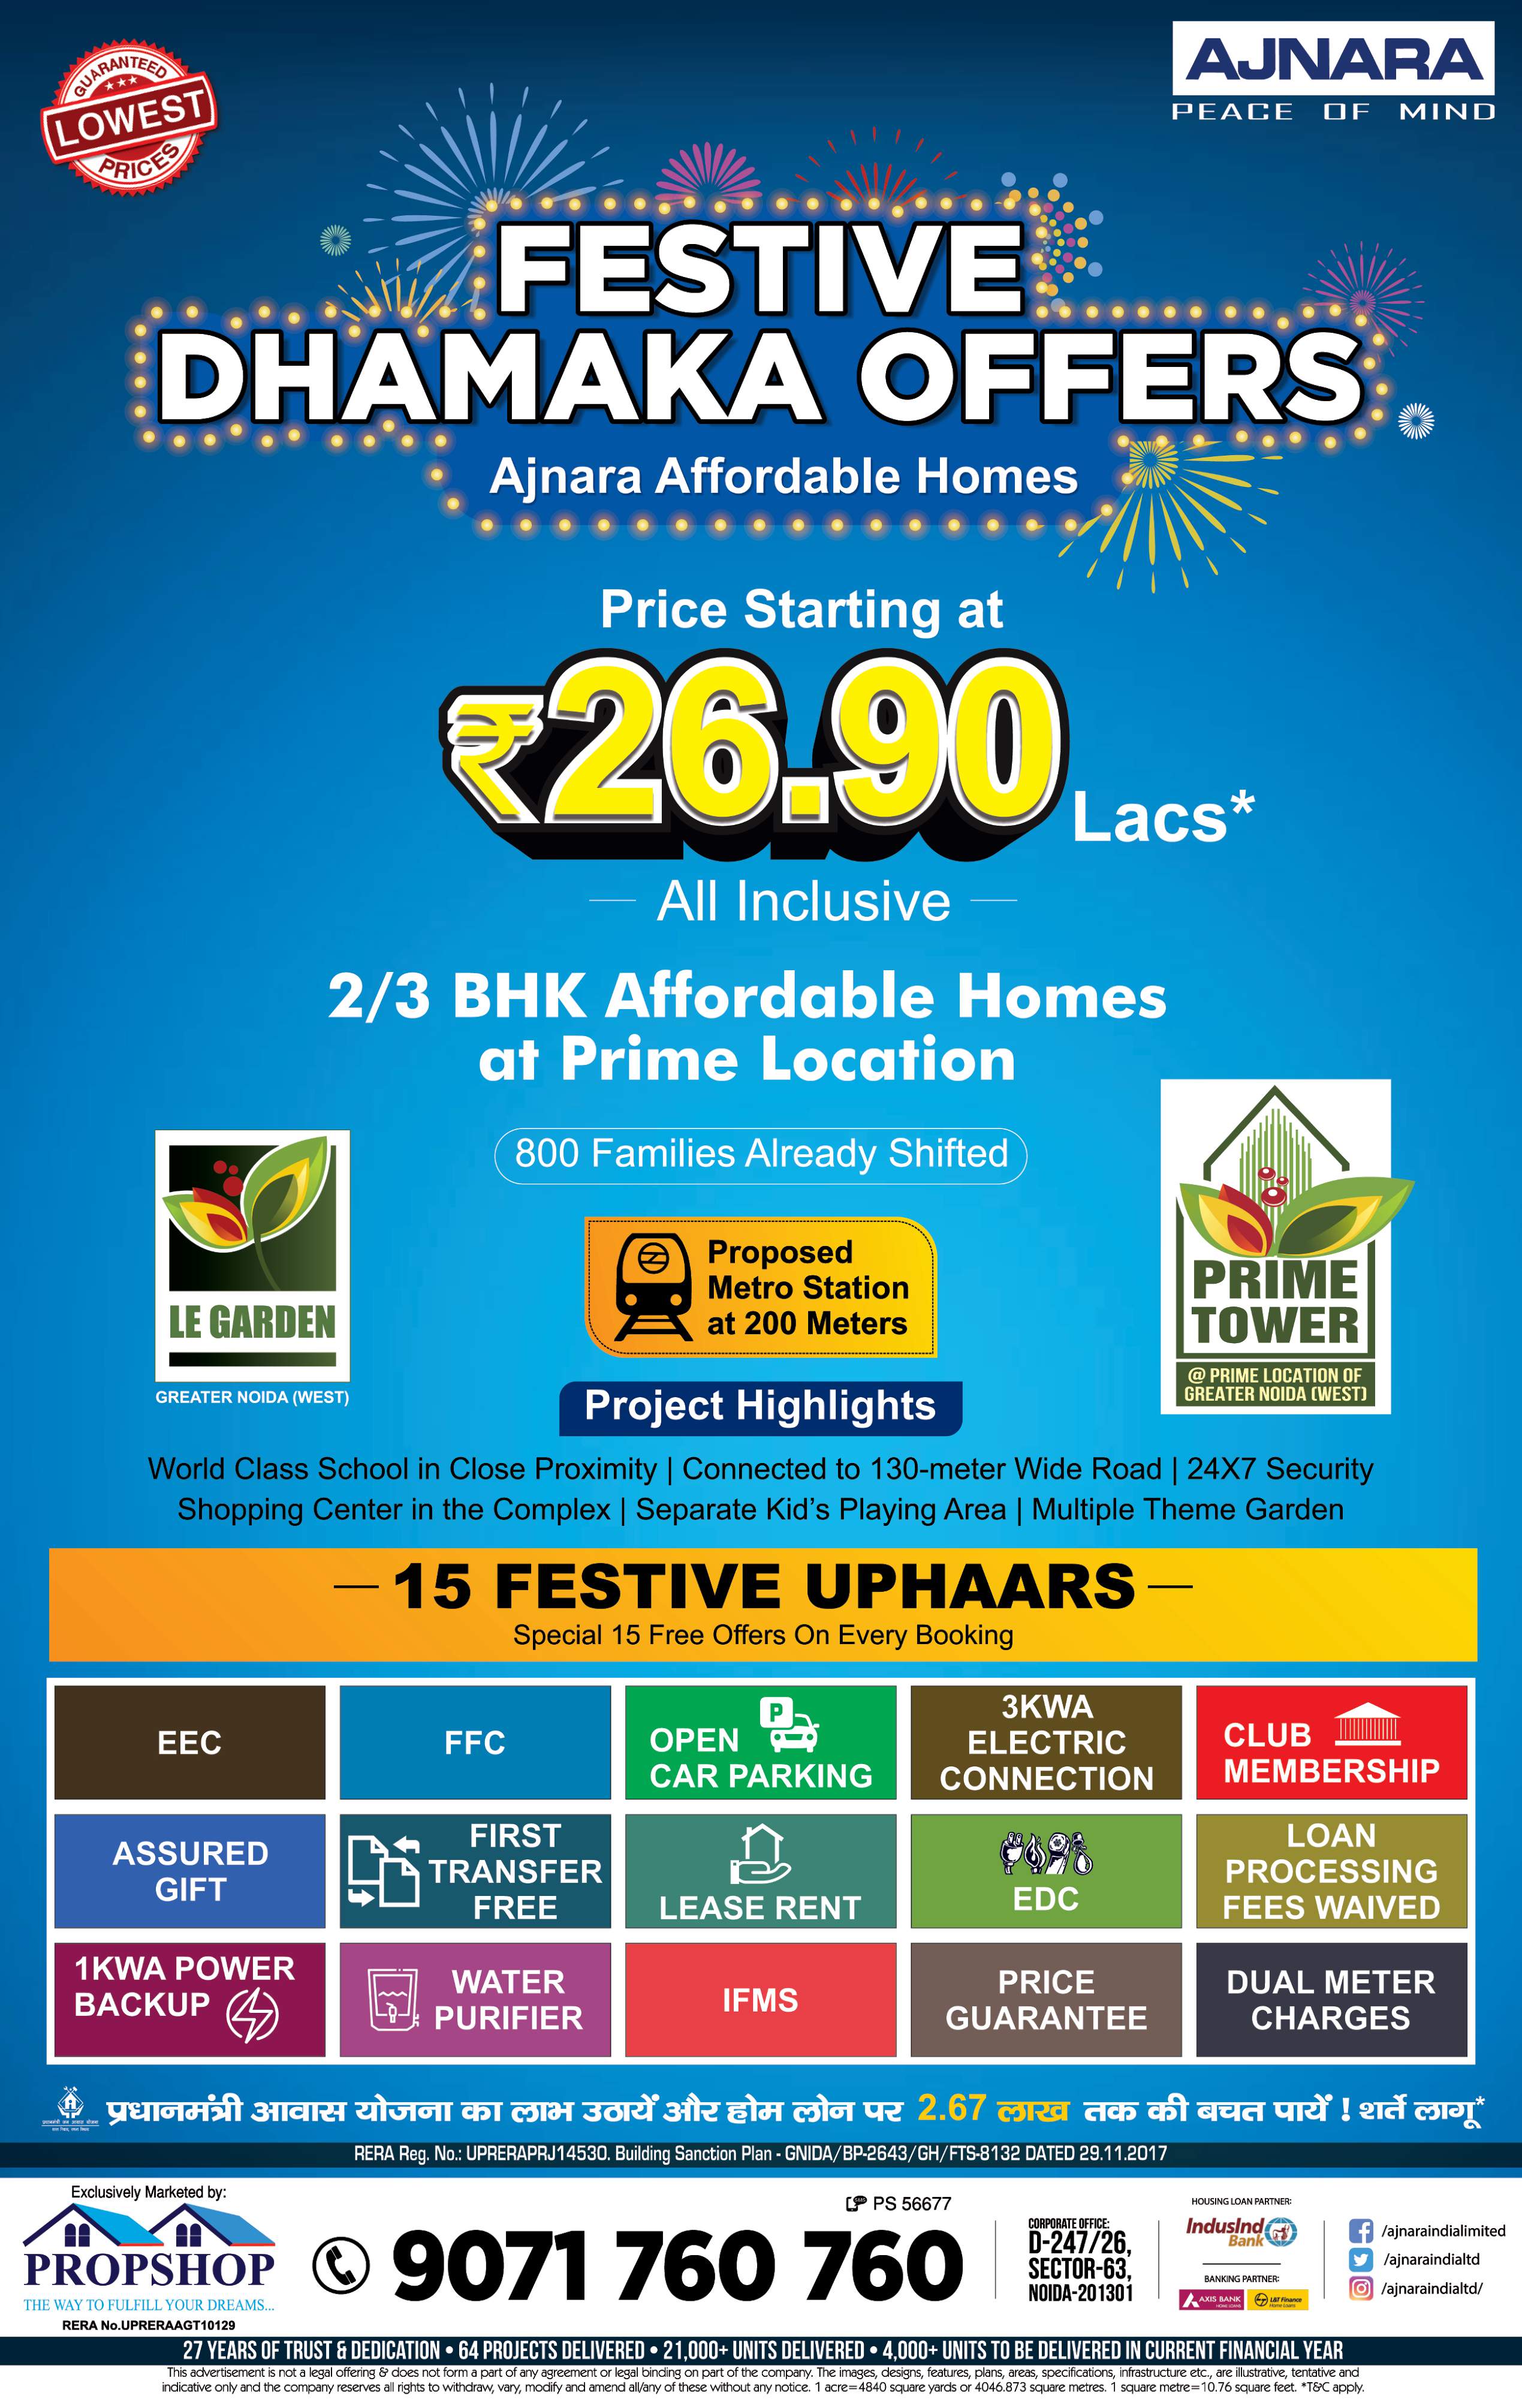 ajnara-properties-festive-dhamaka-offers-price-starting-at-rs-26.90-lacs-ad-dainik-jagran-delhi-29-08-2019.jpg